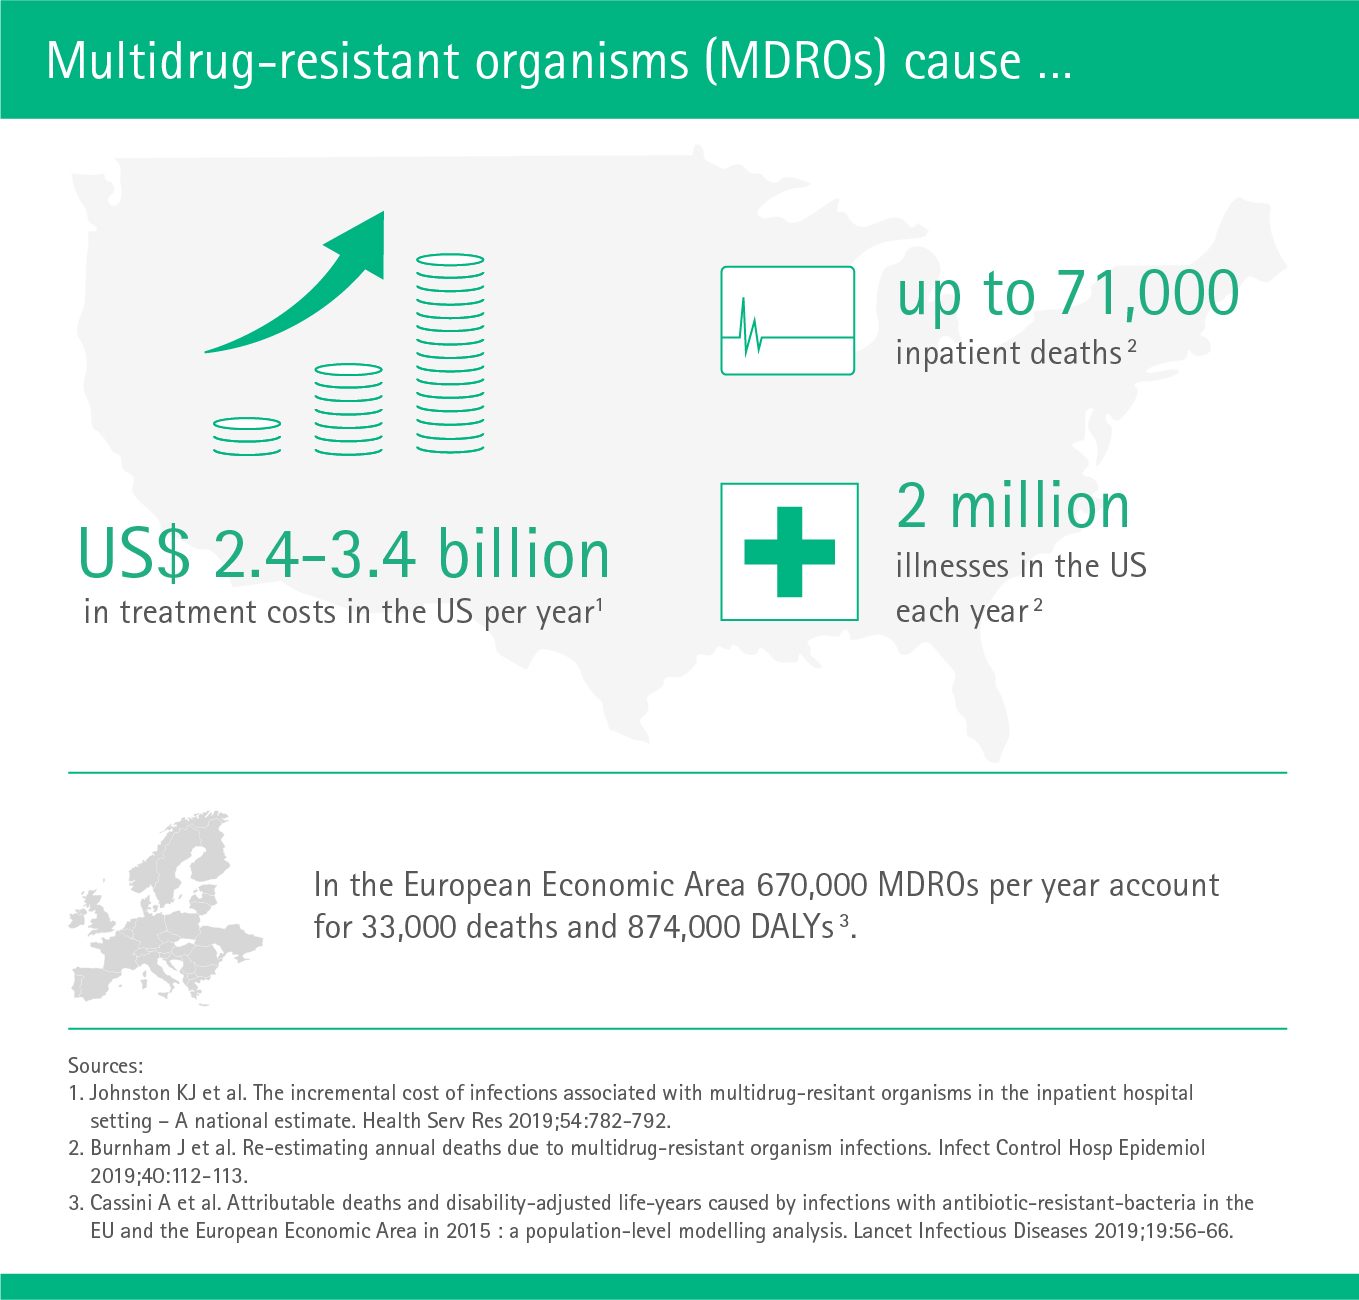 Multidrug-resistant organisms cause